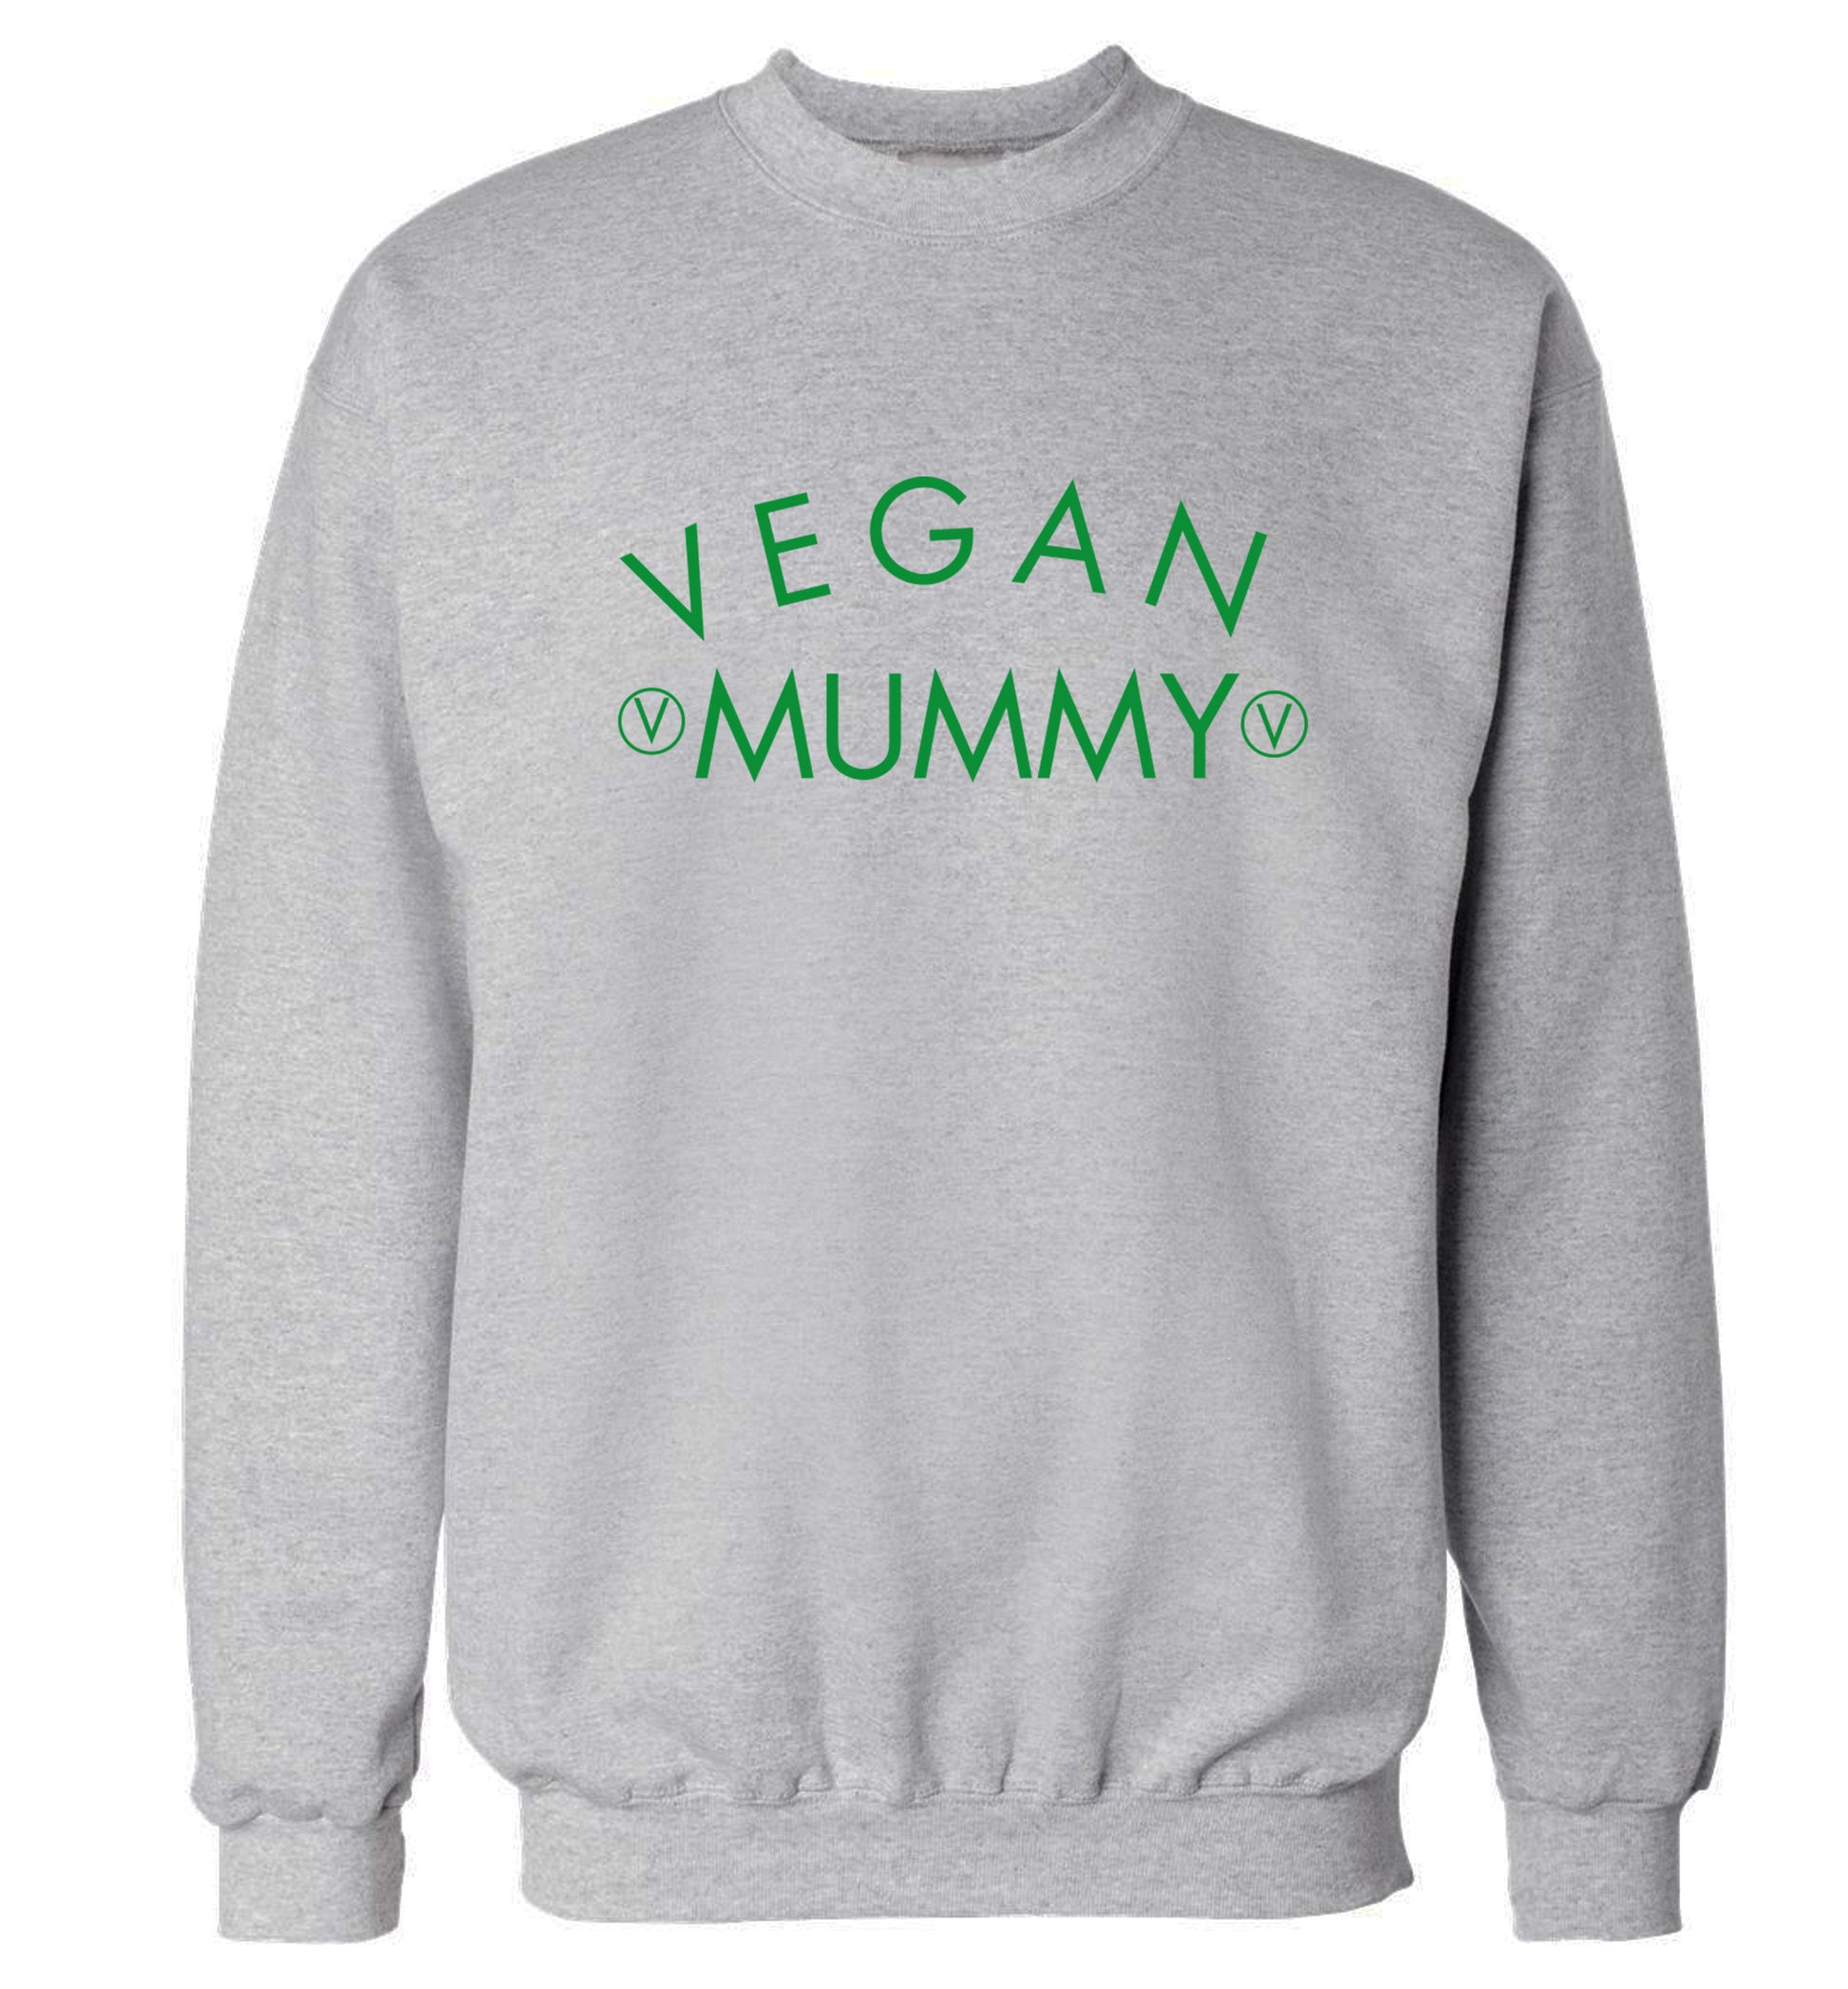 Vegan mummy Adult's unisex grey Sweater 2XL